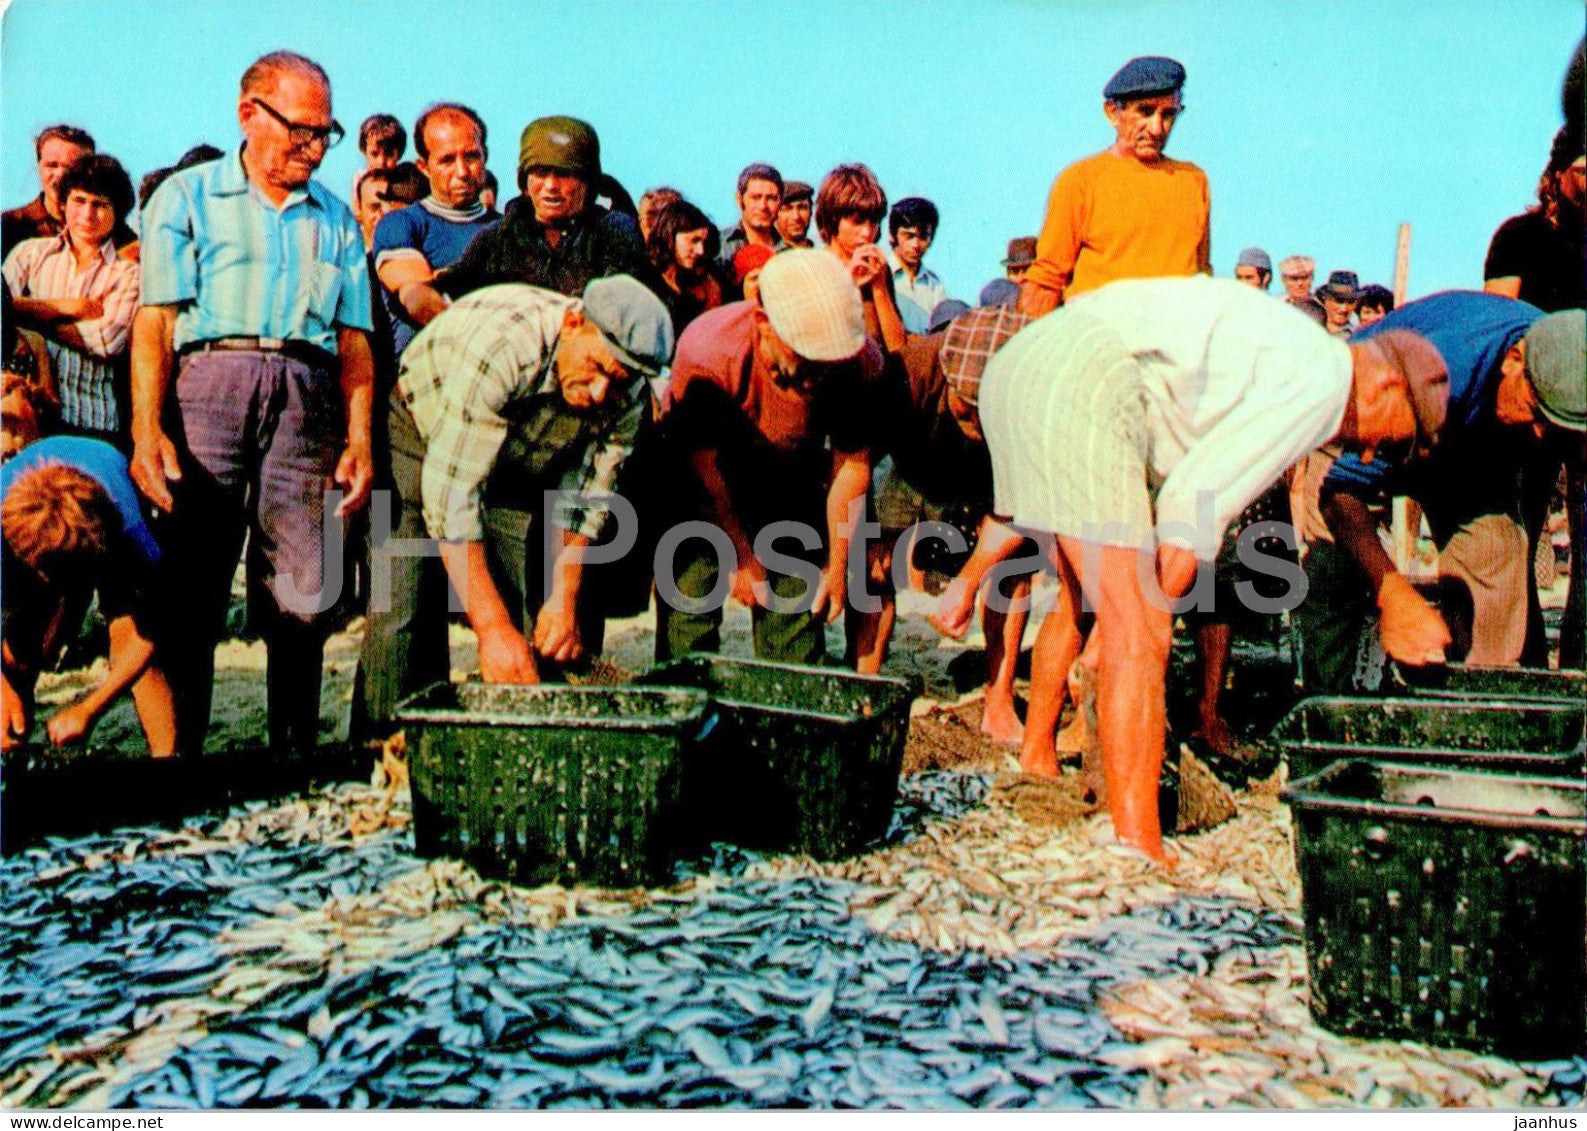 Praia de Mira - Gathering the Fish - fishing - 1499 - Portugal - unused - JH Postcards